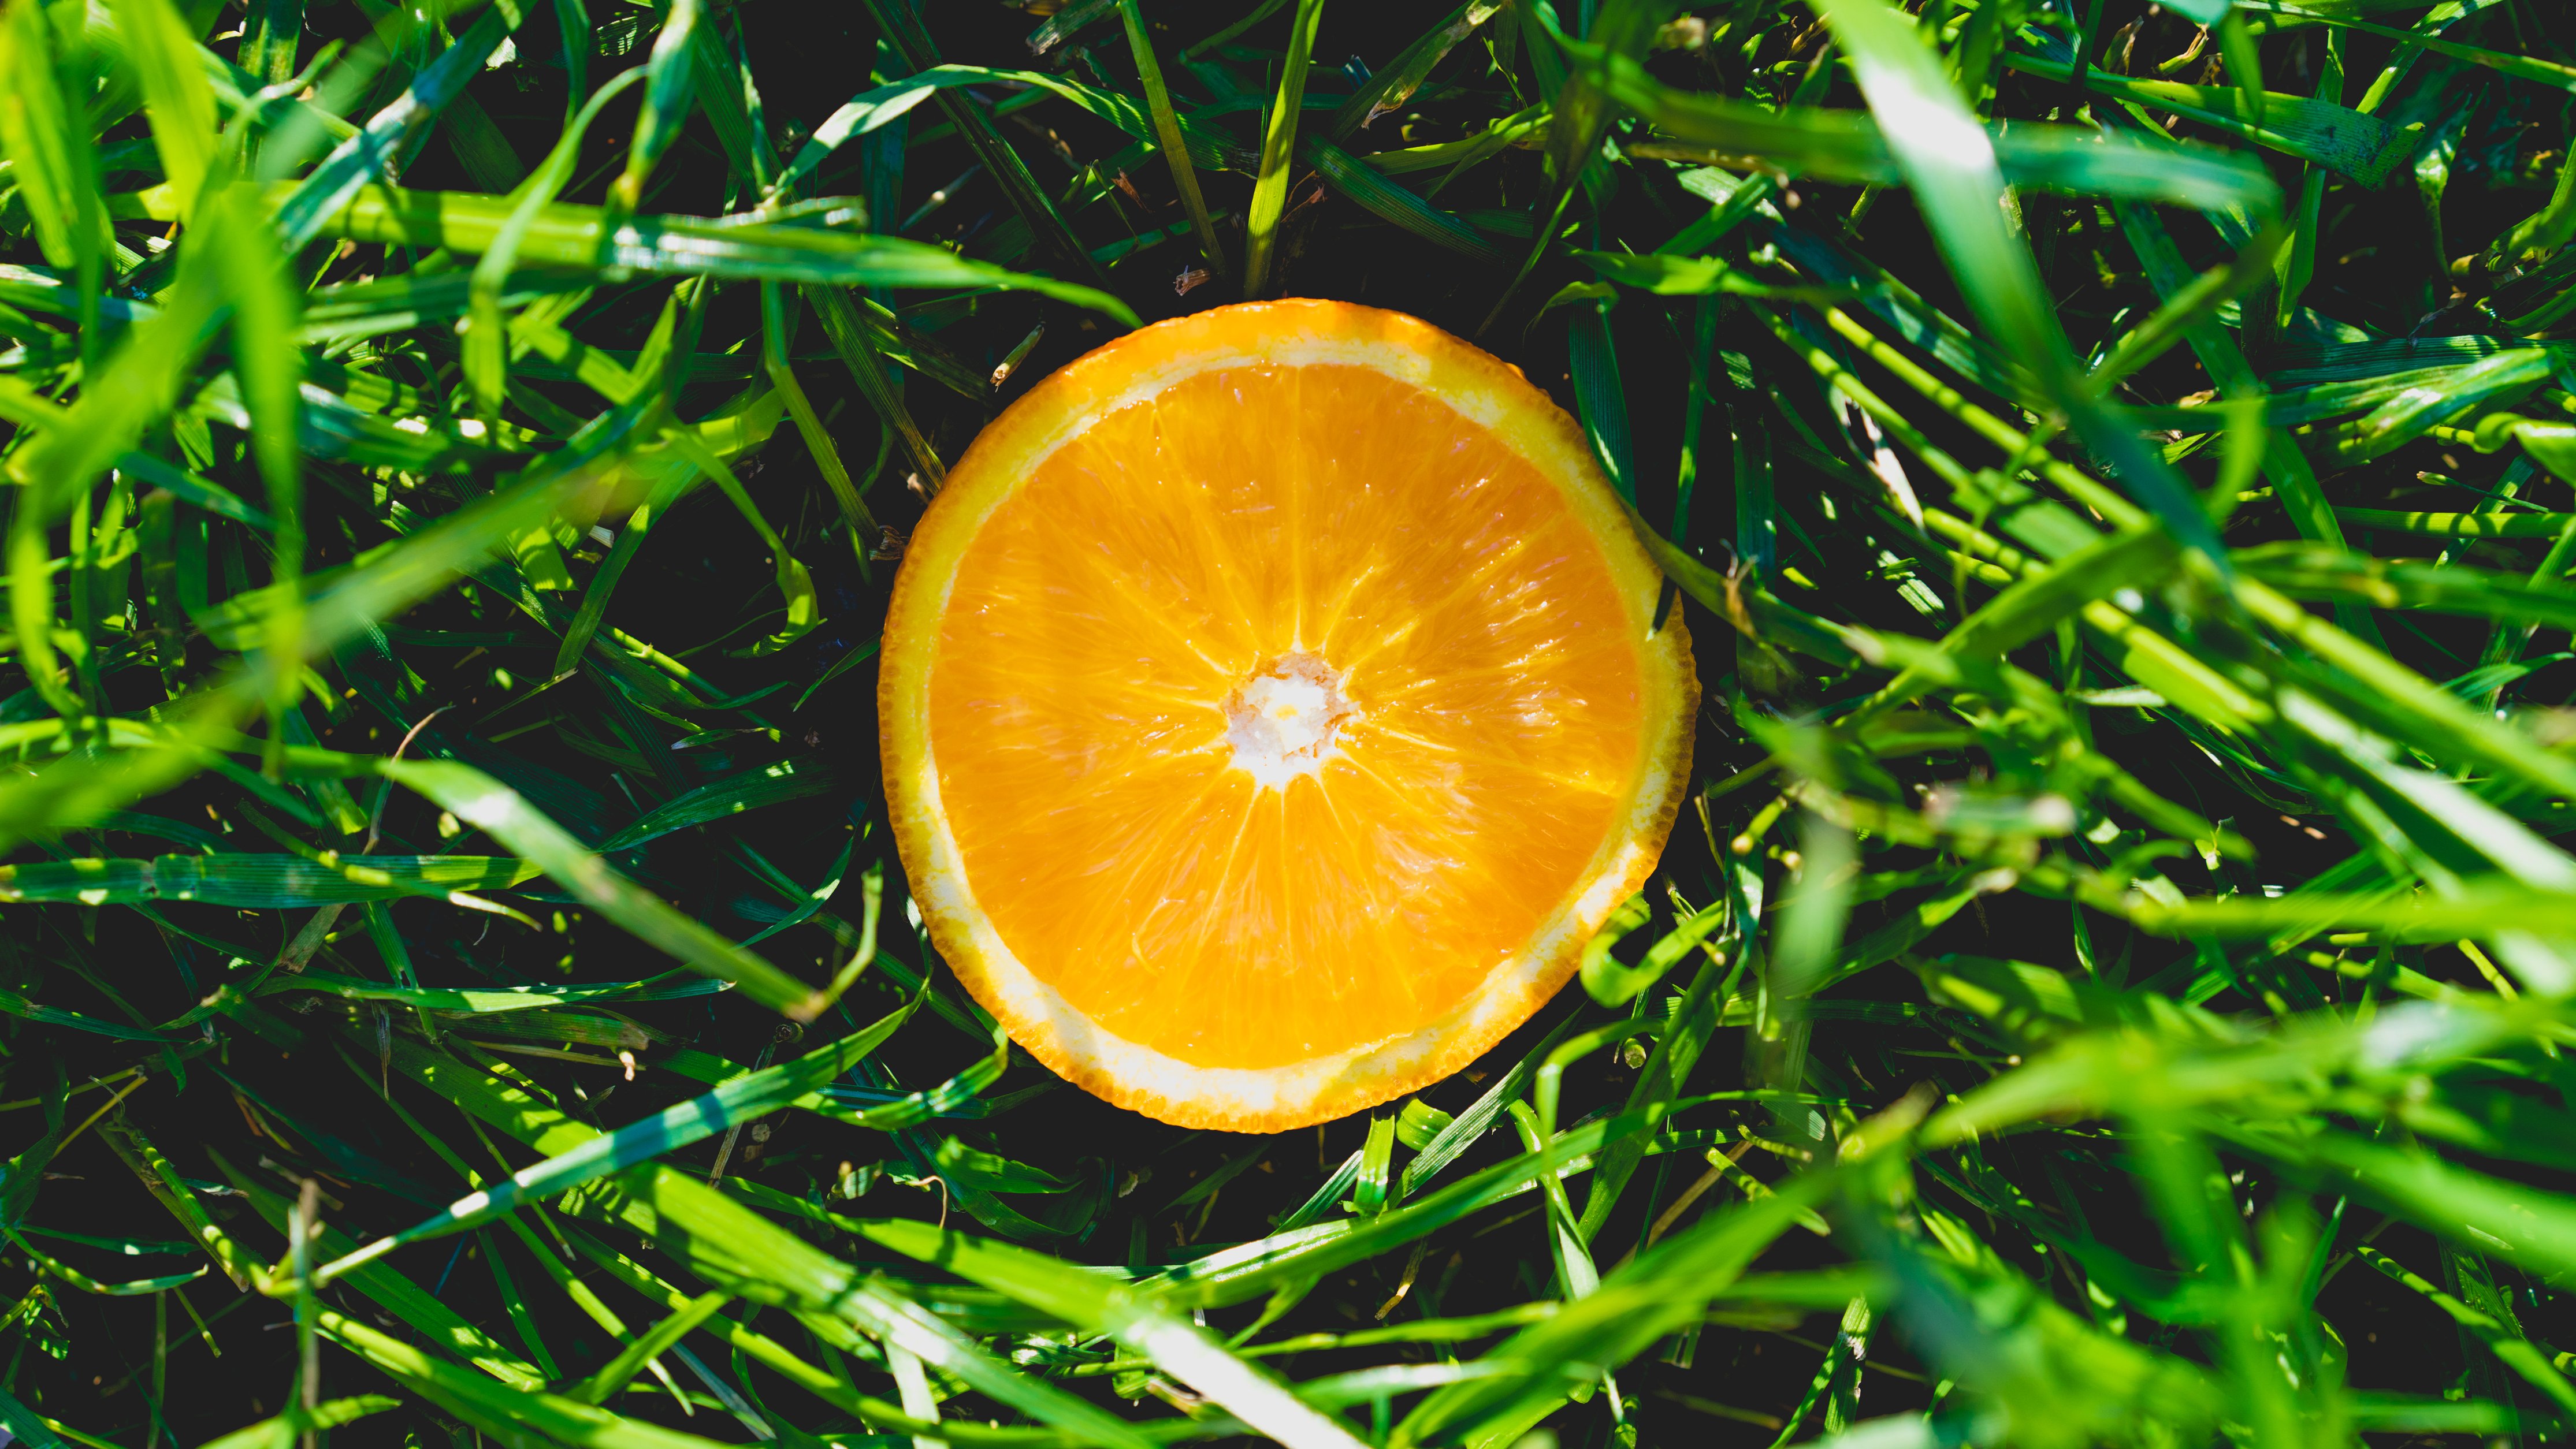 Orange In The Grass by Dan Gold